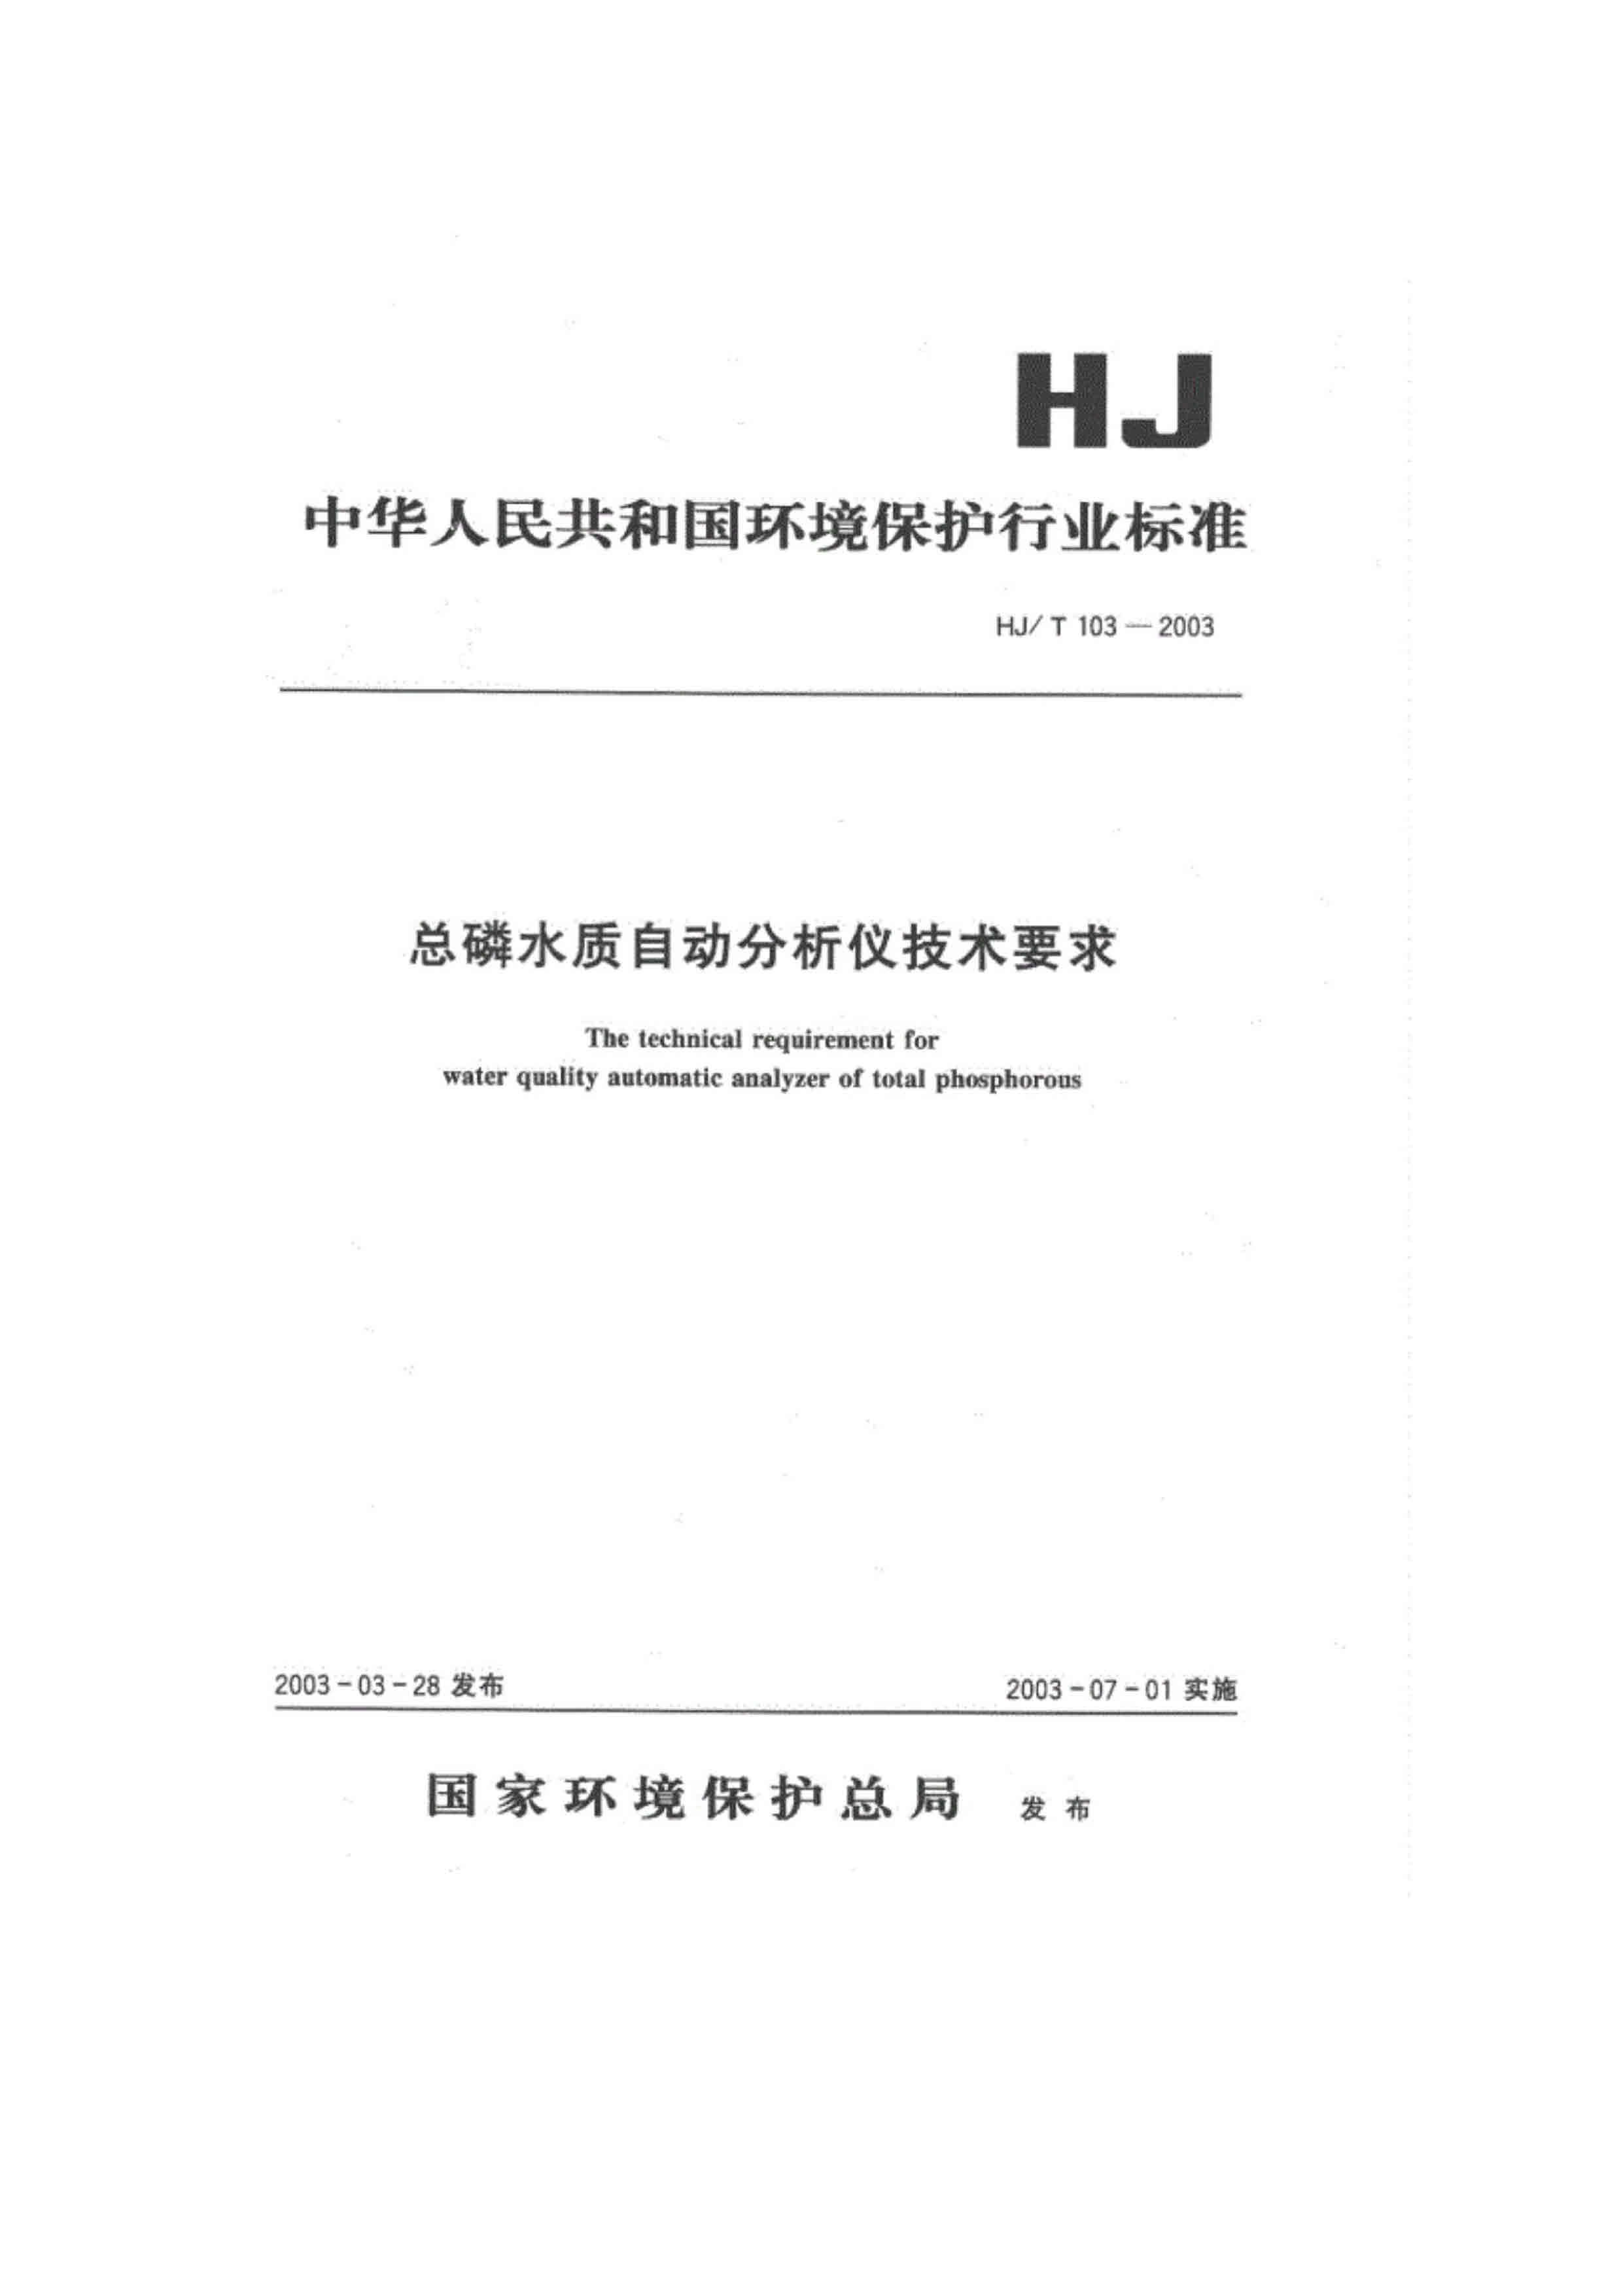 HJ-T103-2003 环境保护产品技术要求 总磷水质自动分析仪技术要求 下载